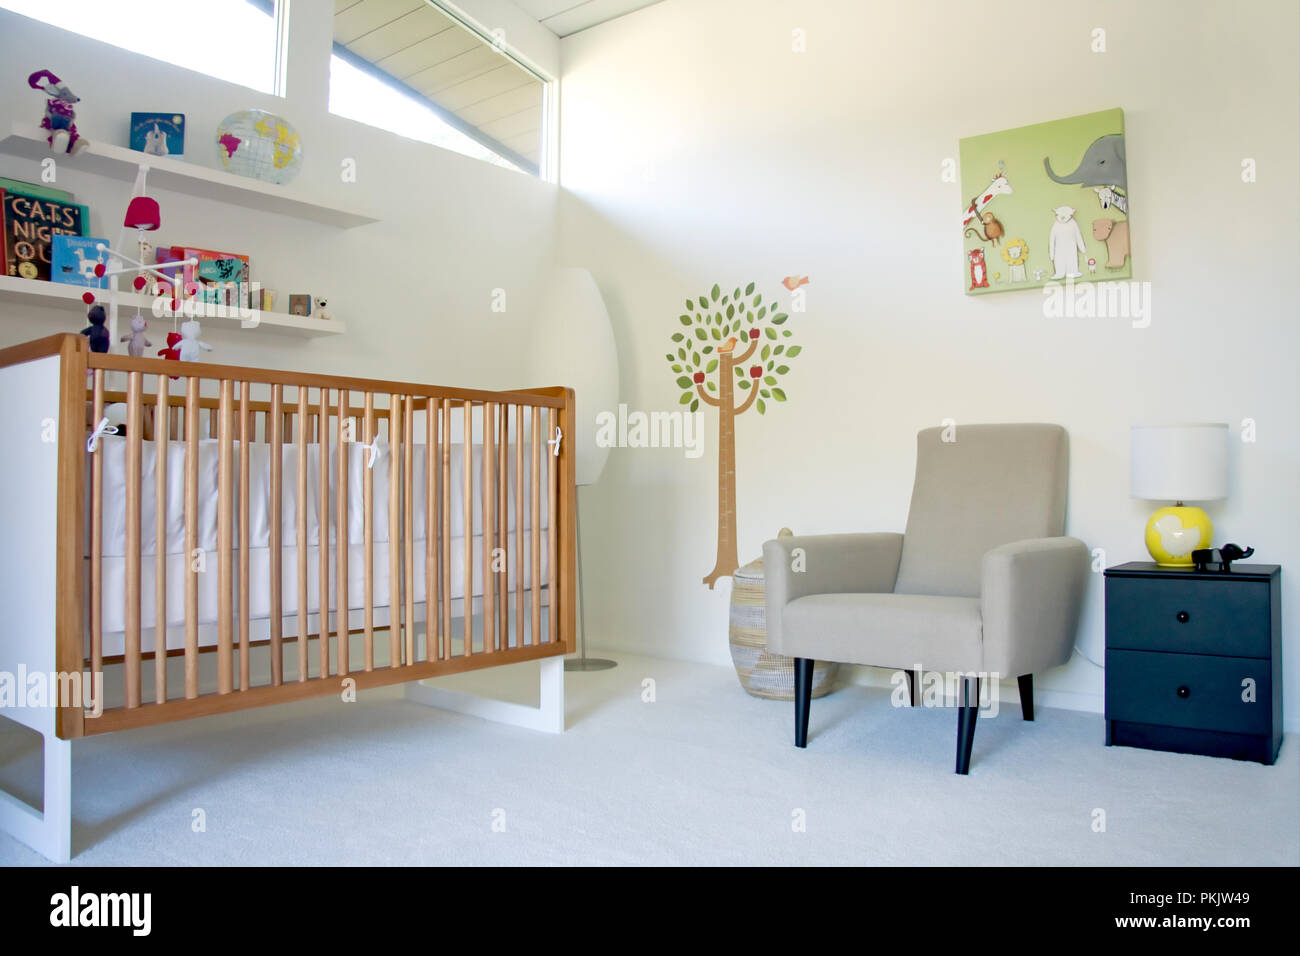 Nursery room decor Stock Photo